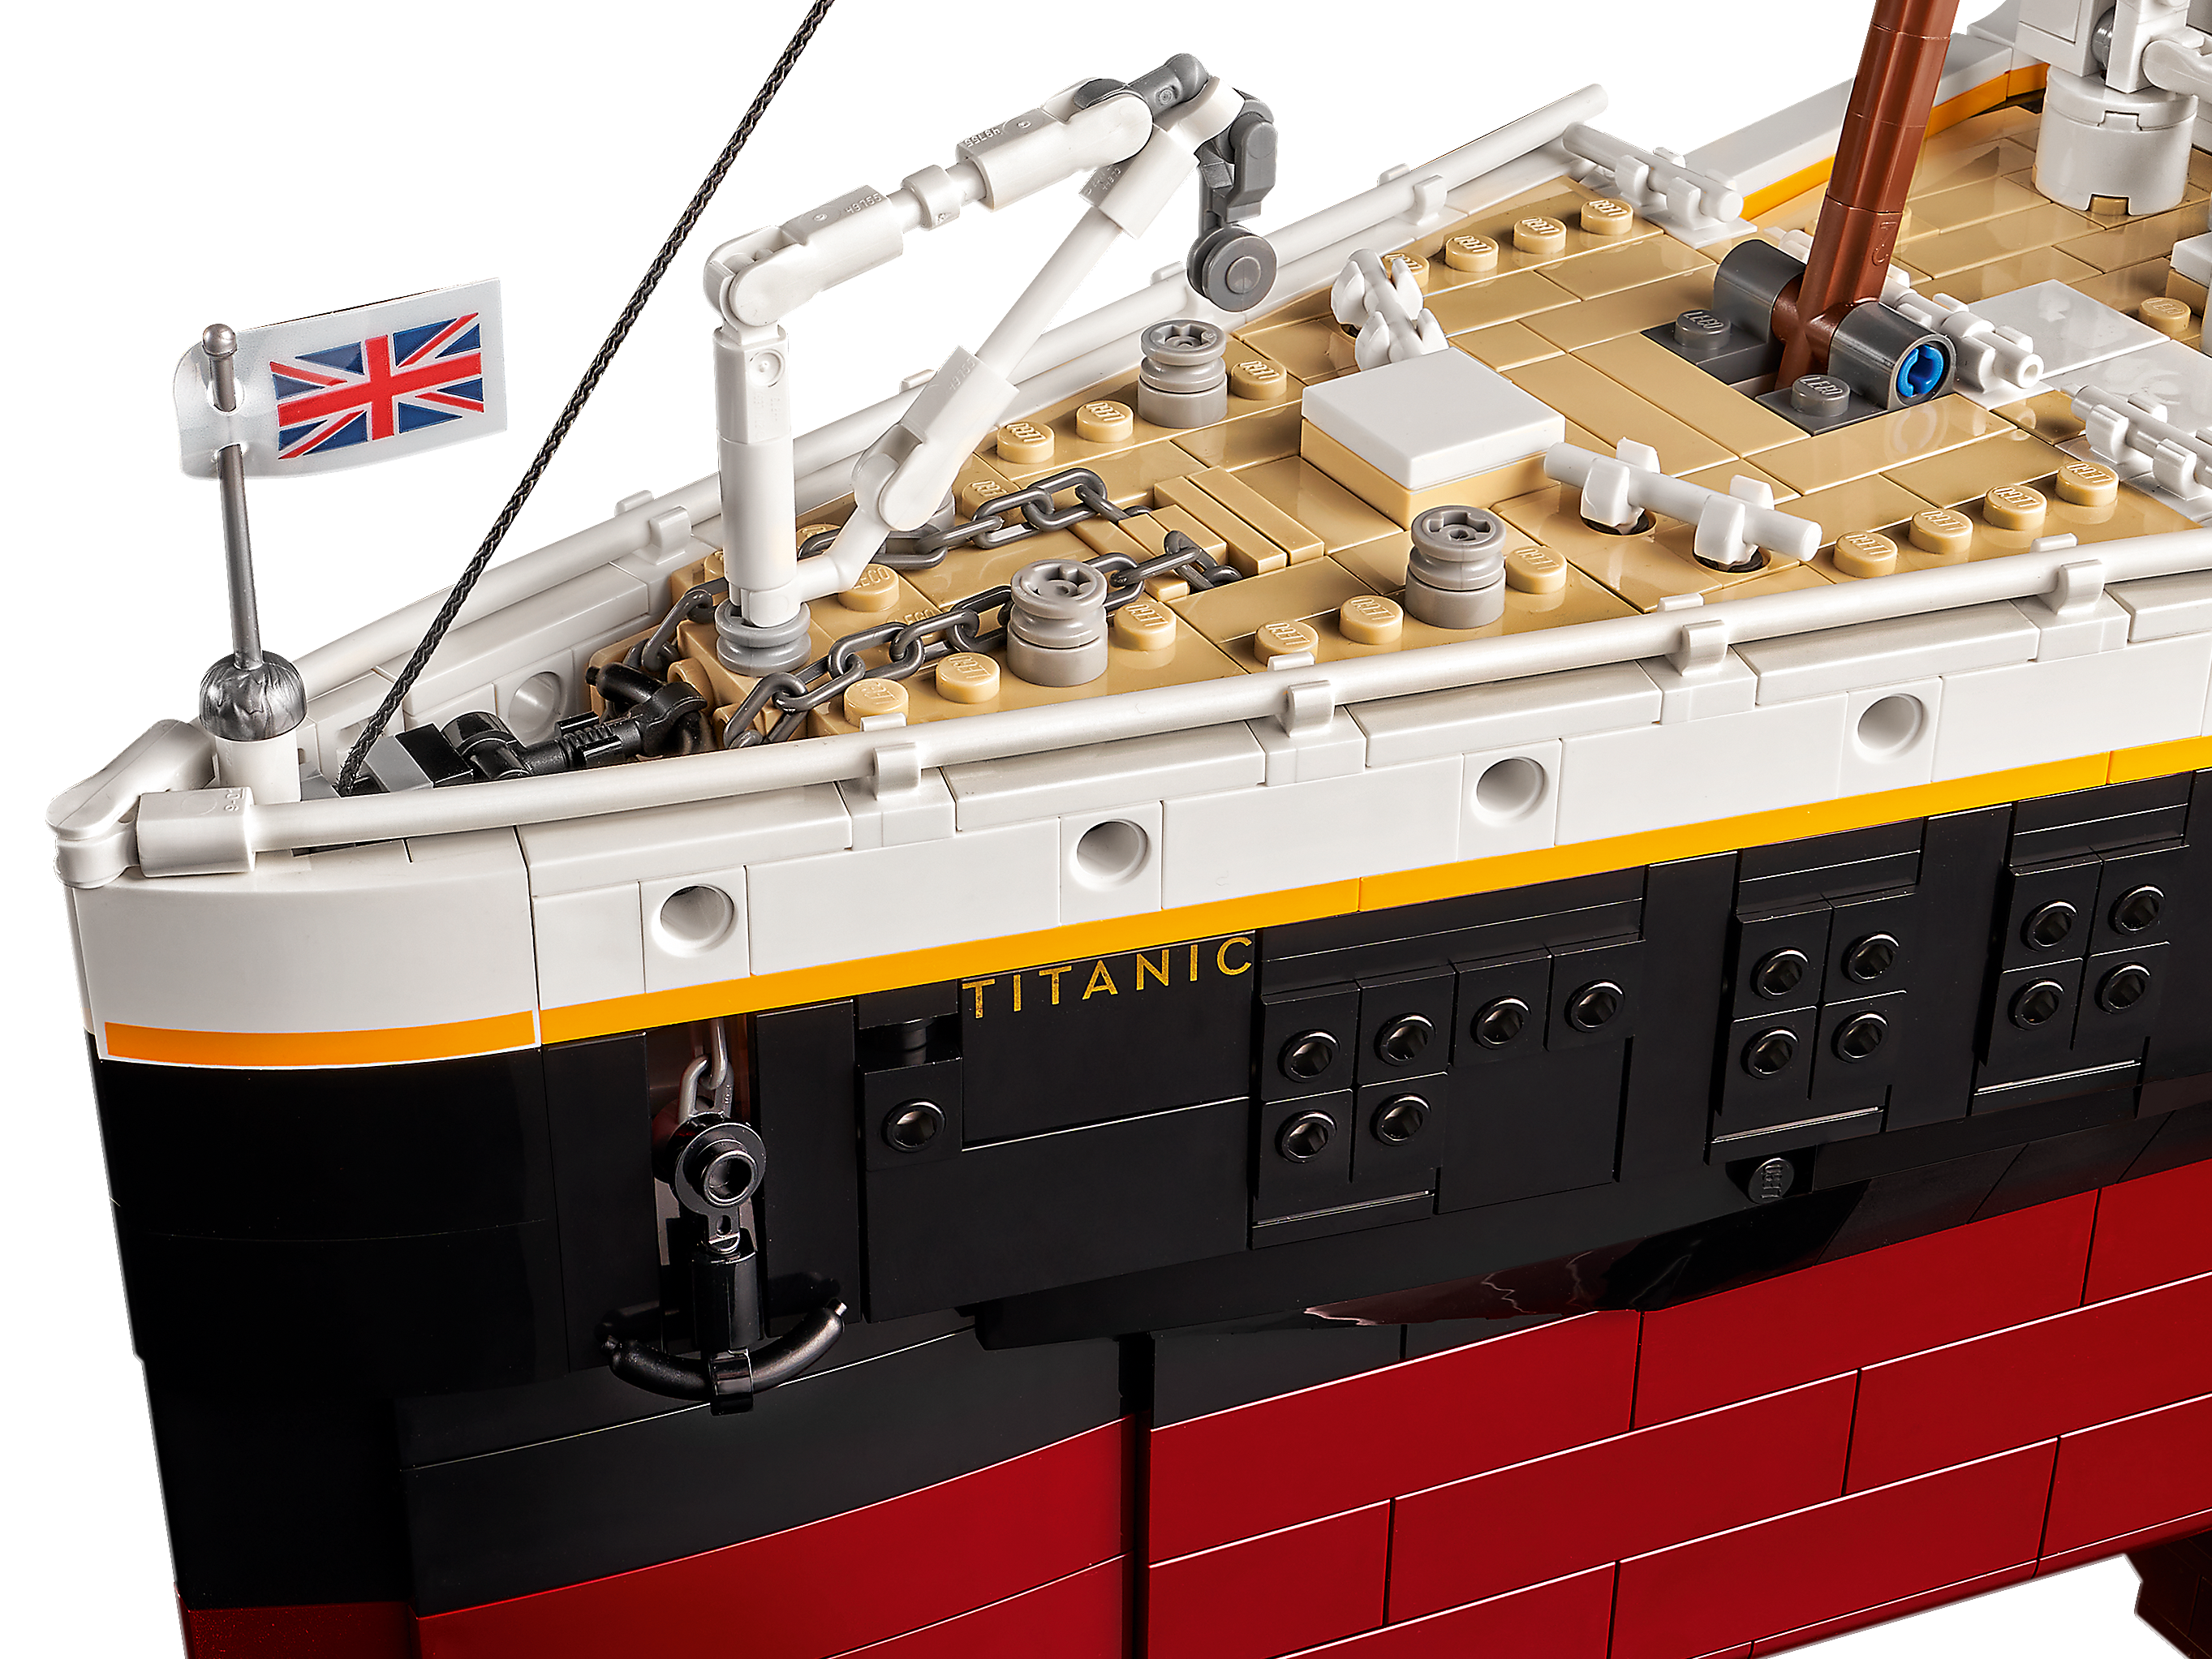 LEGO Creator Expert Titanic 10294 